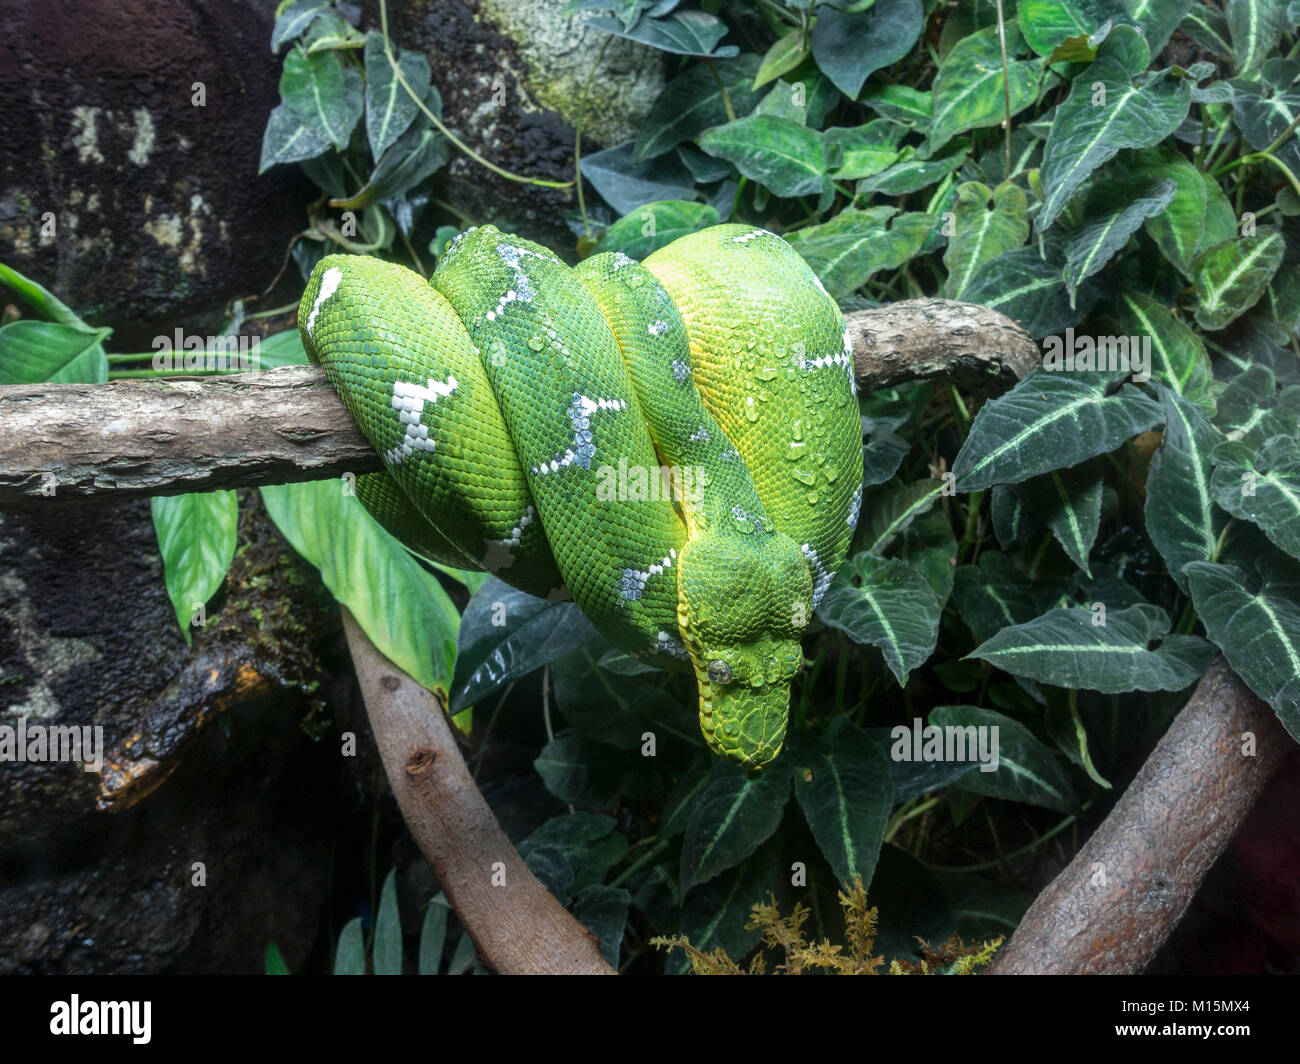 National Aquarium - Emerald Tree Boa